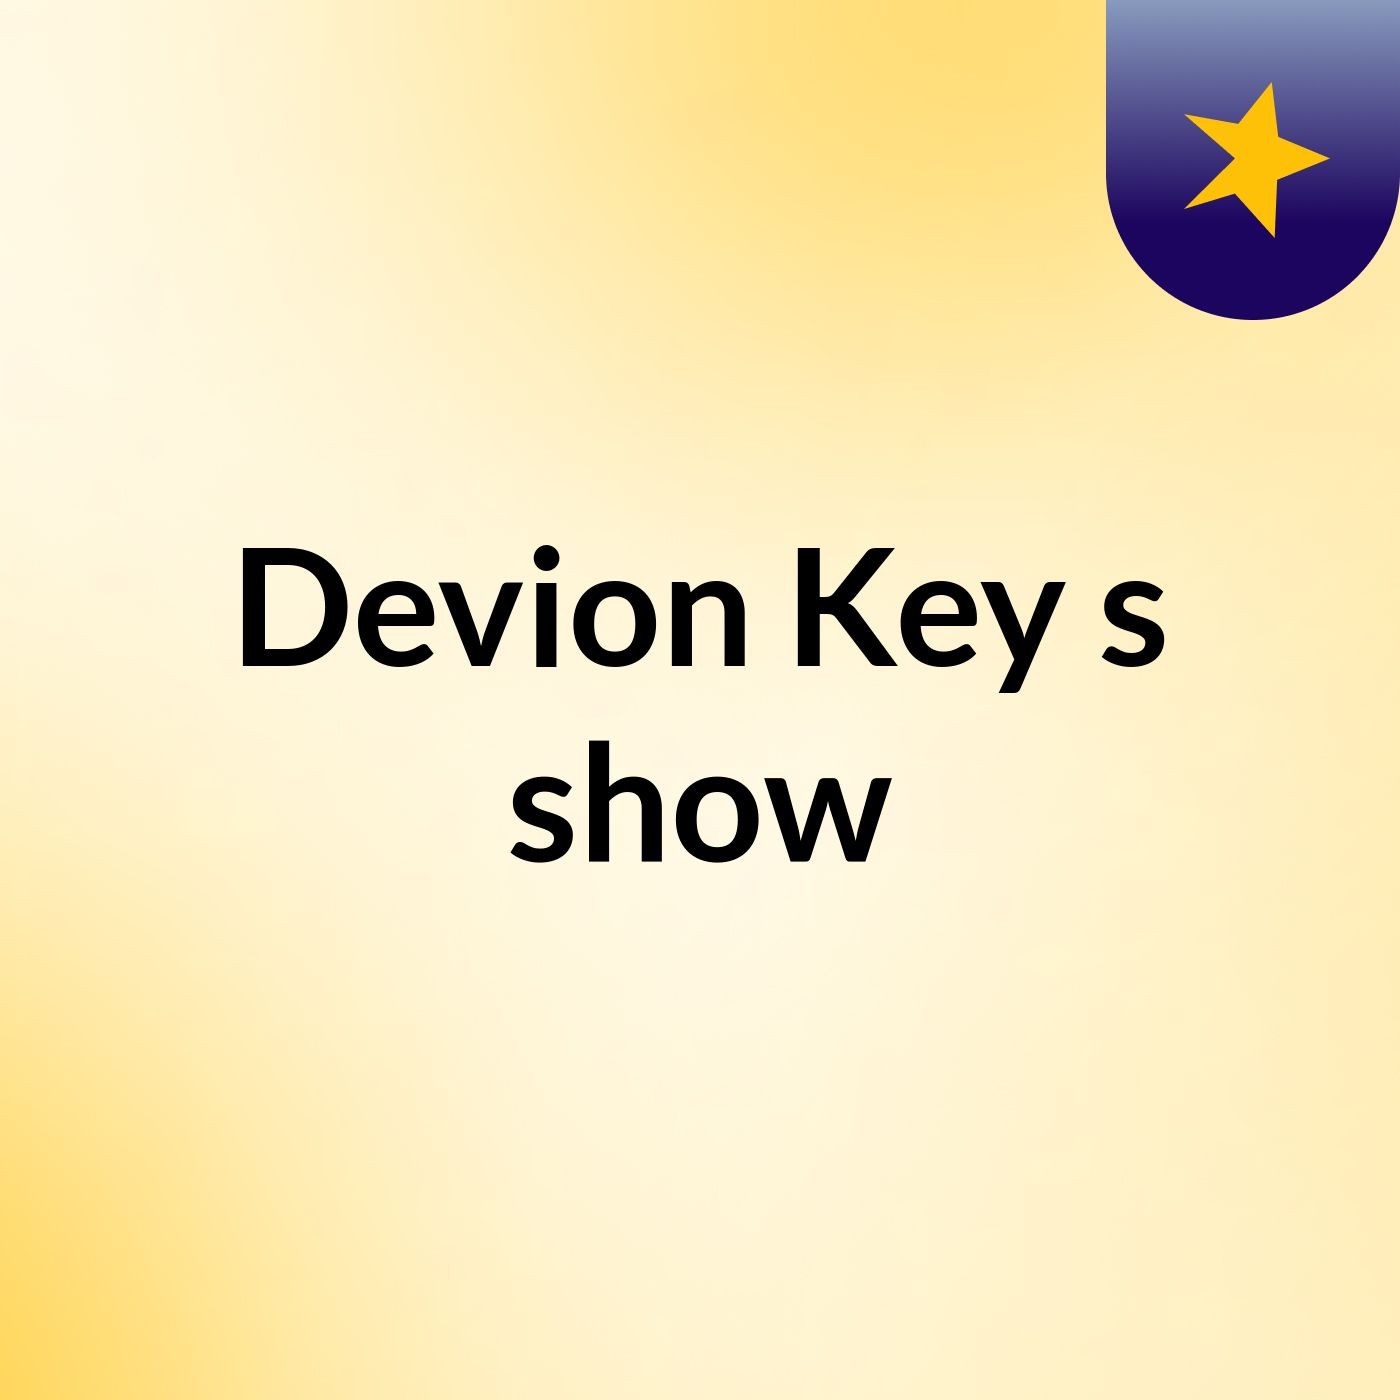 Devion Key's show